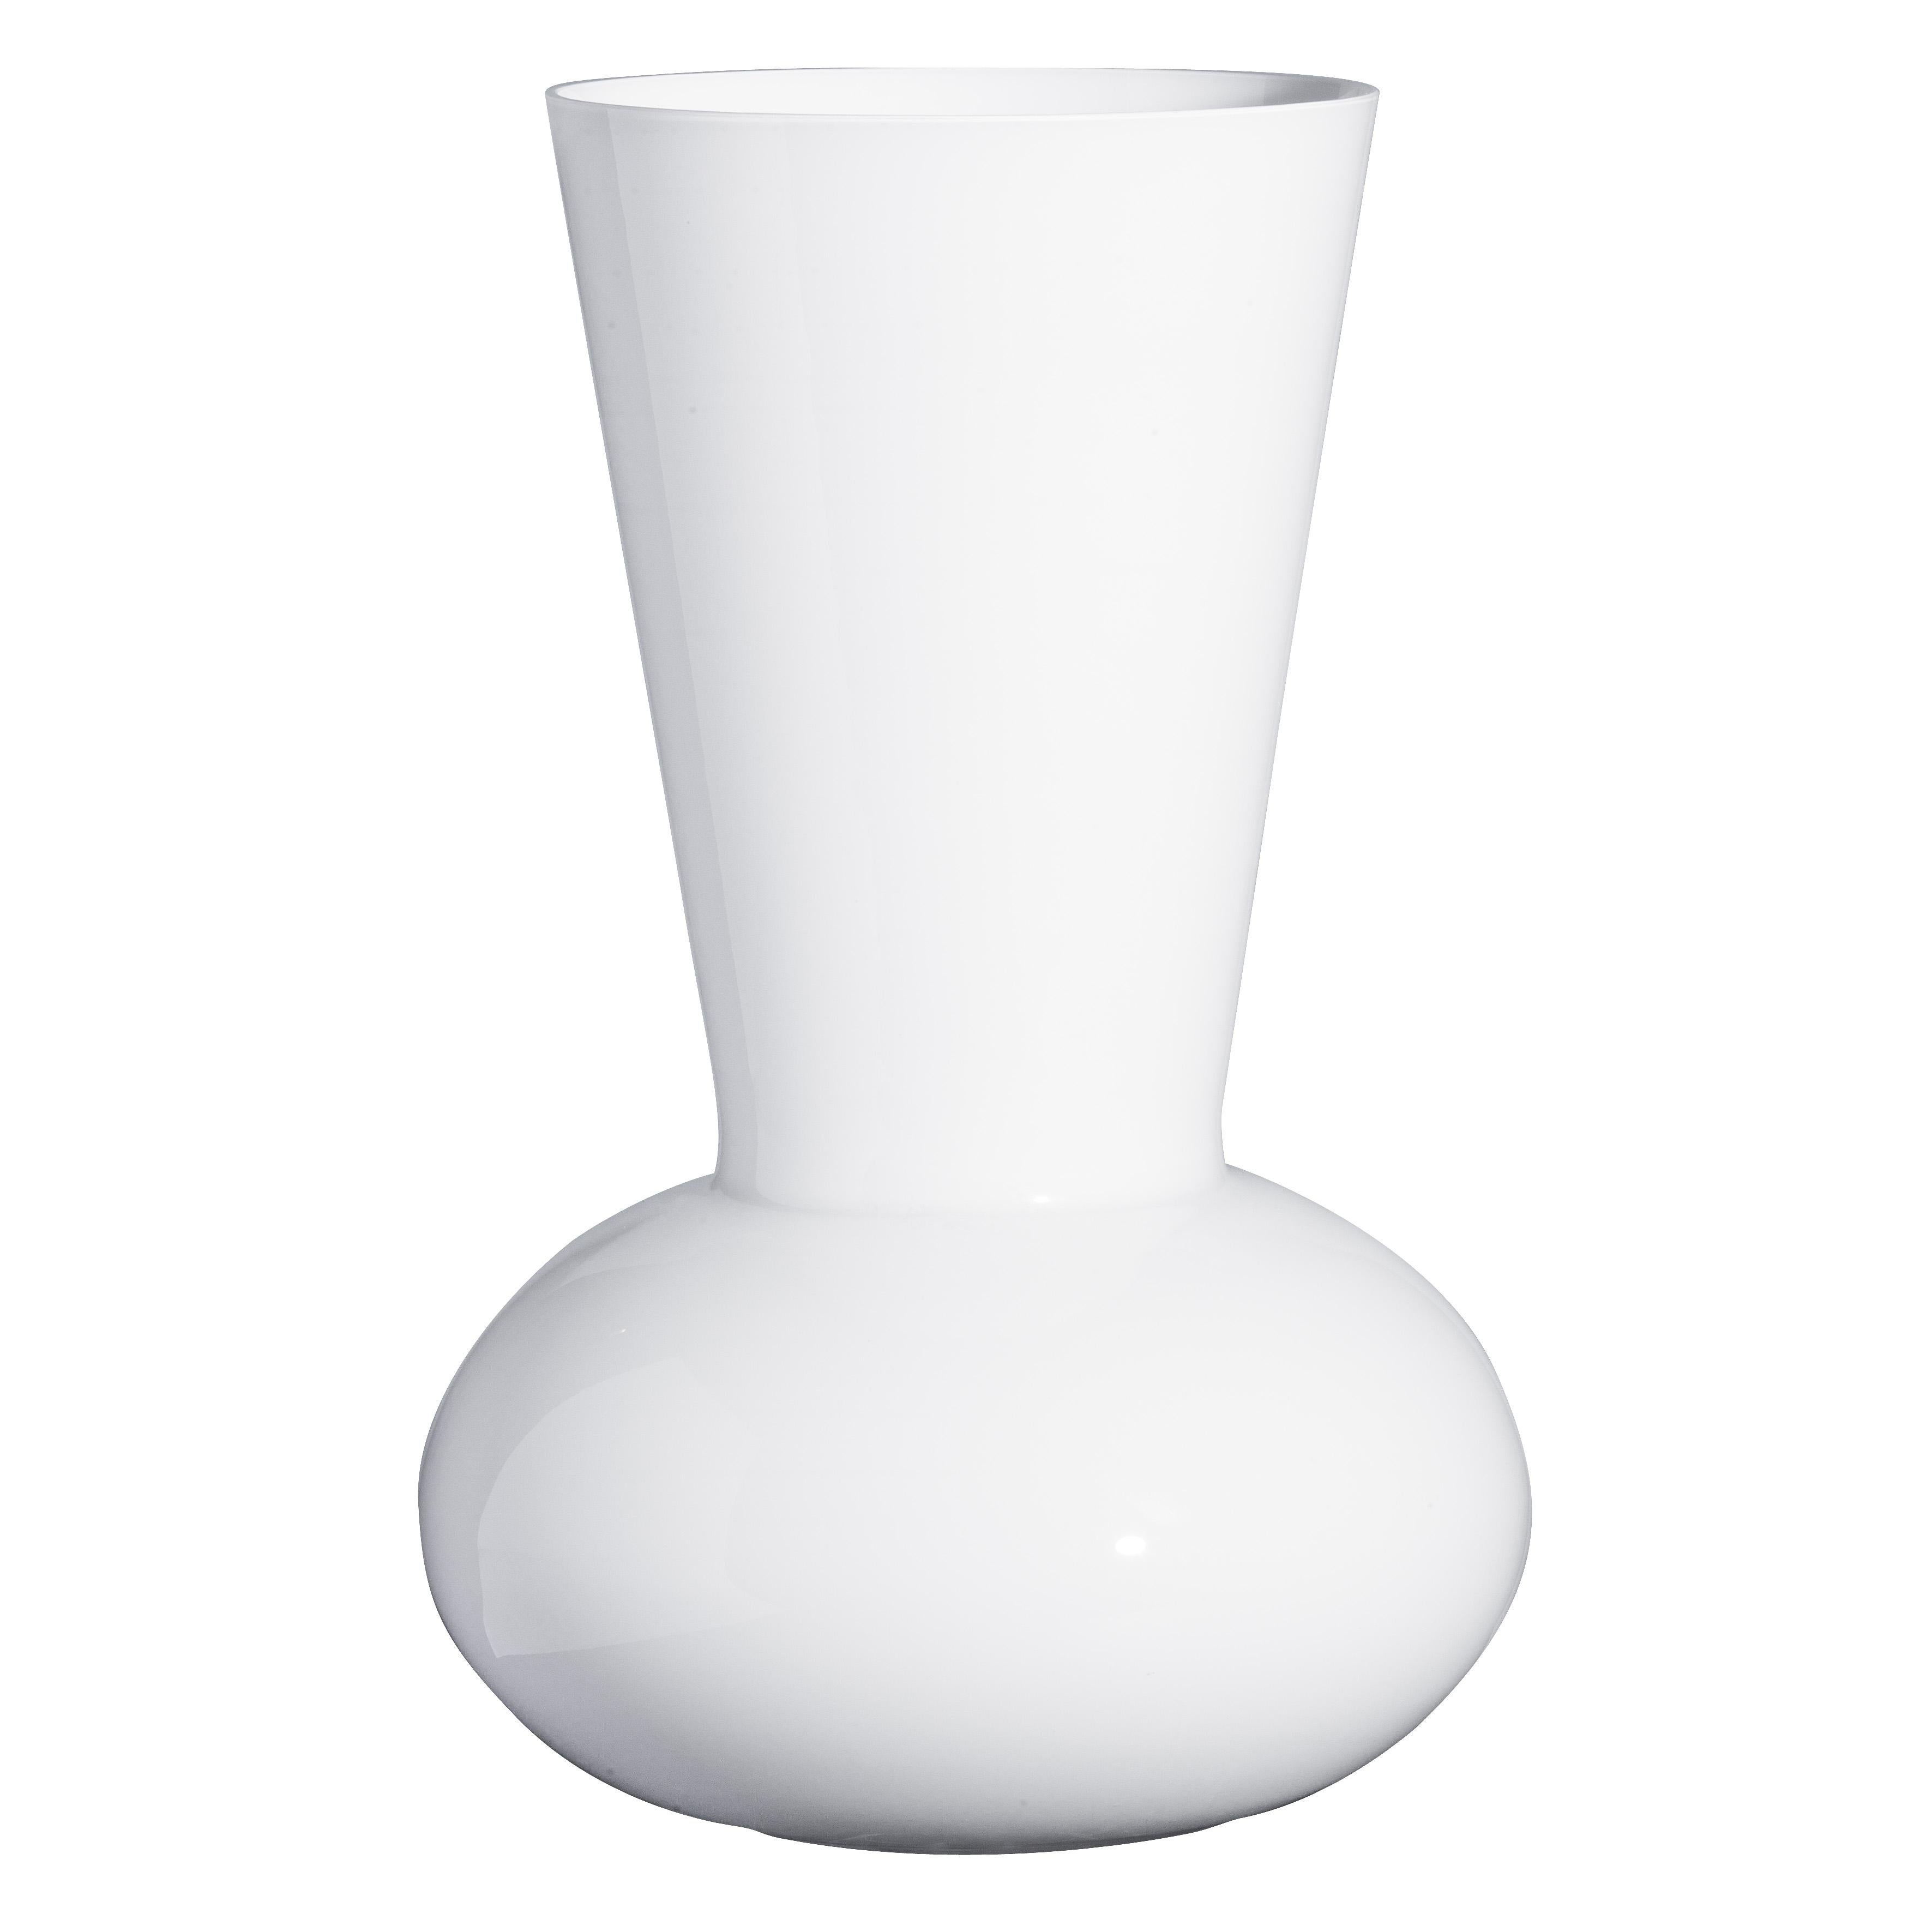 Large Troncosfera Vase in White by Carlo Moretti